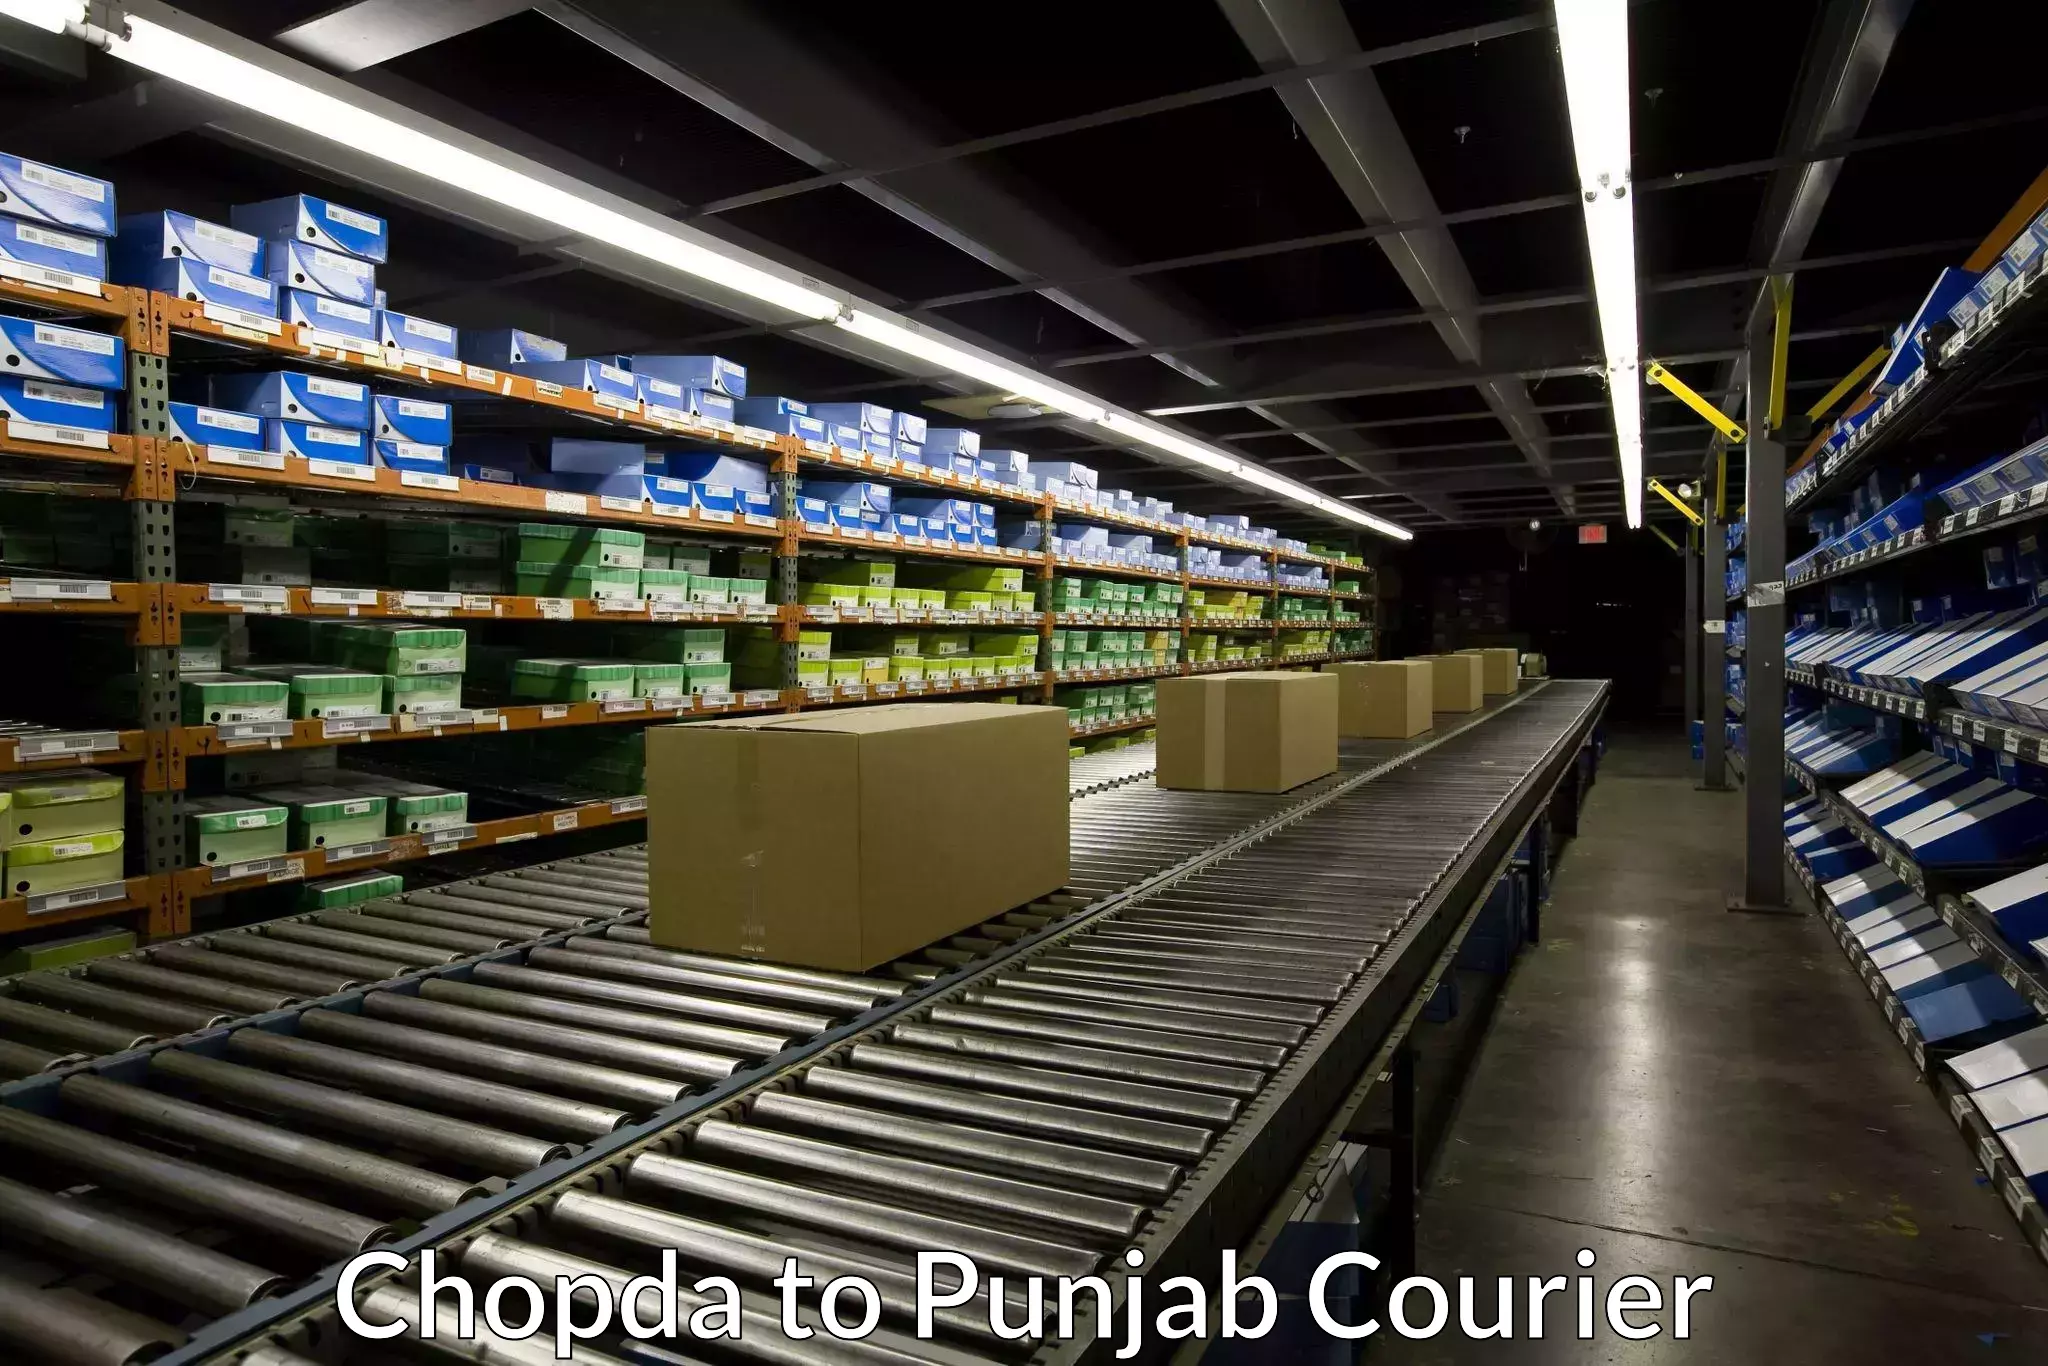 Courier service booking Chopda to Khanna